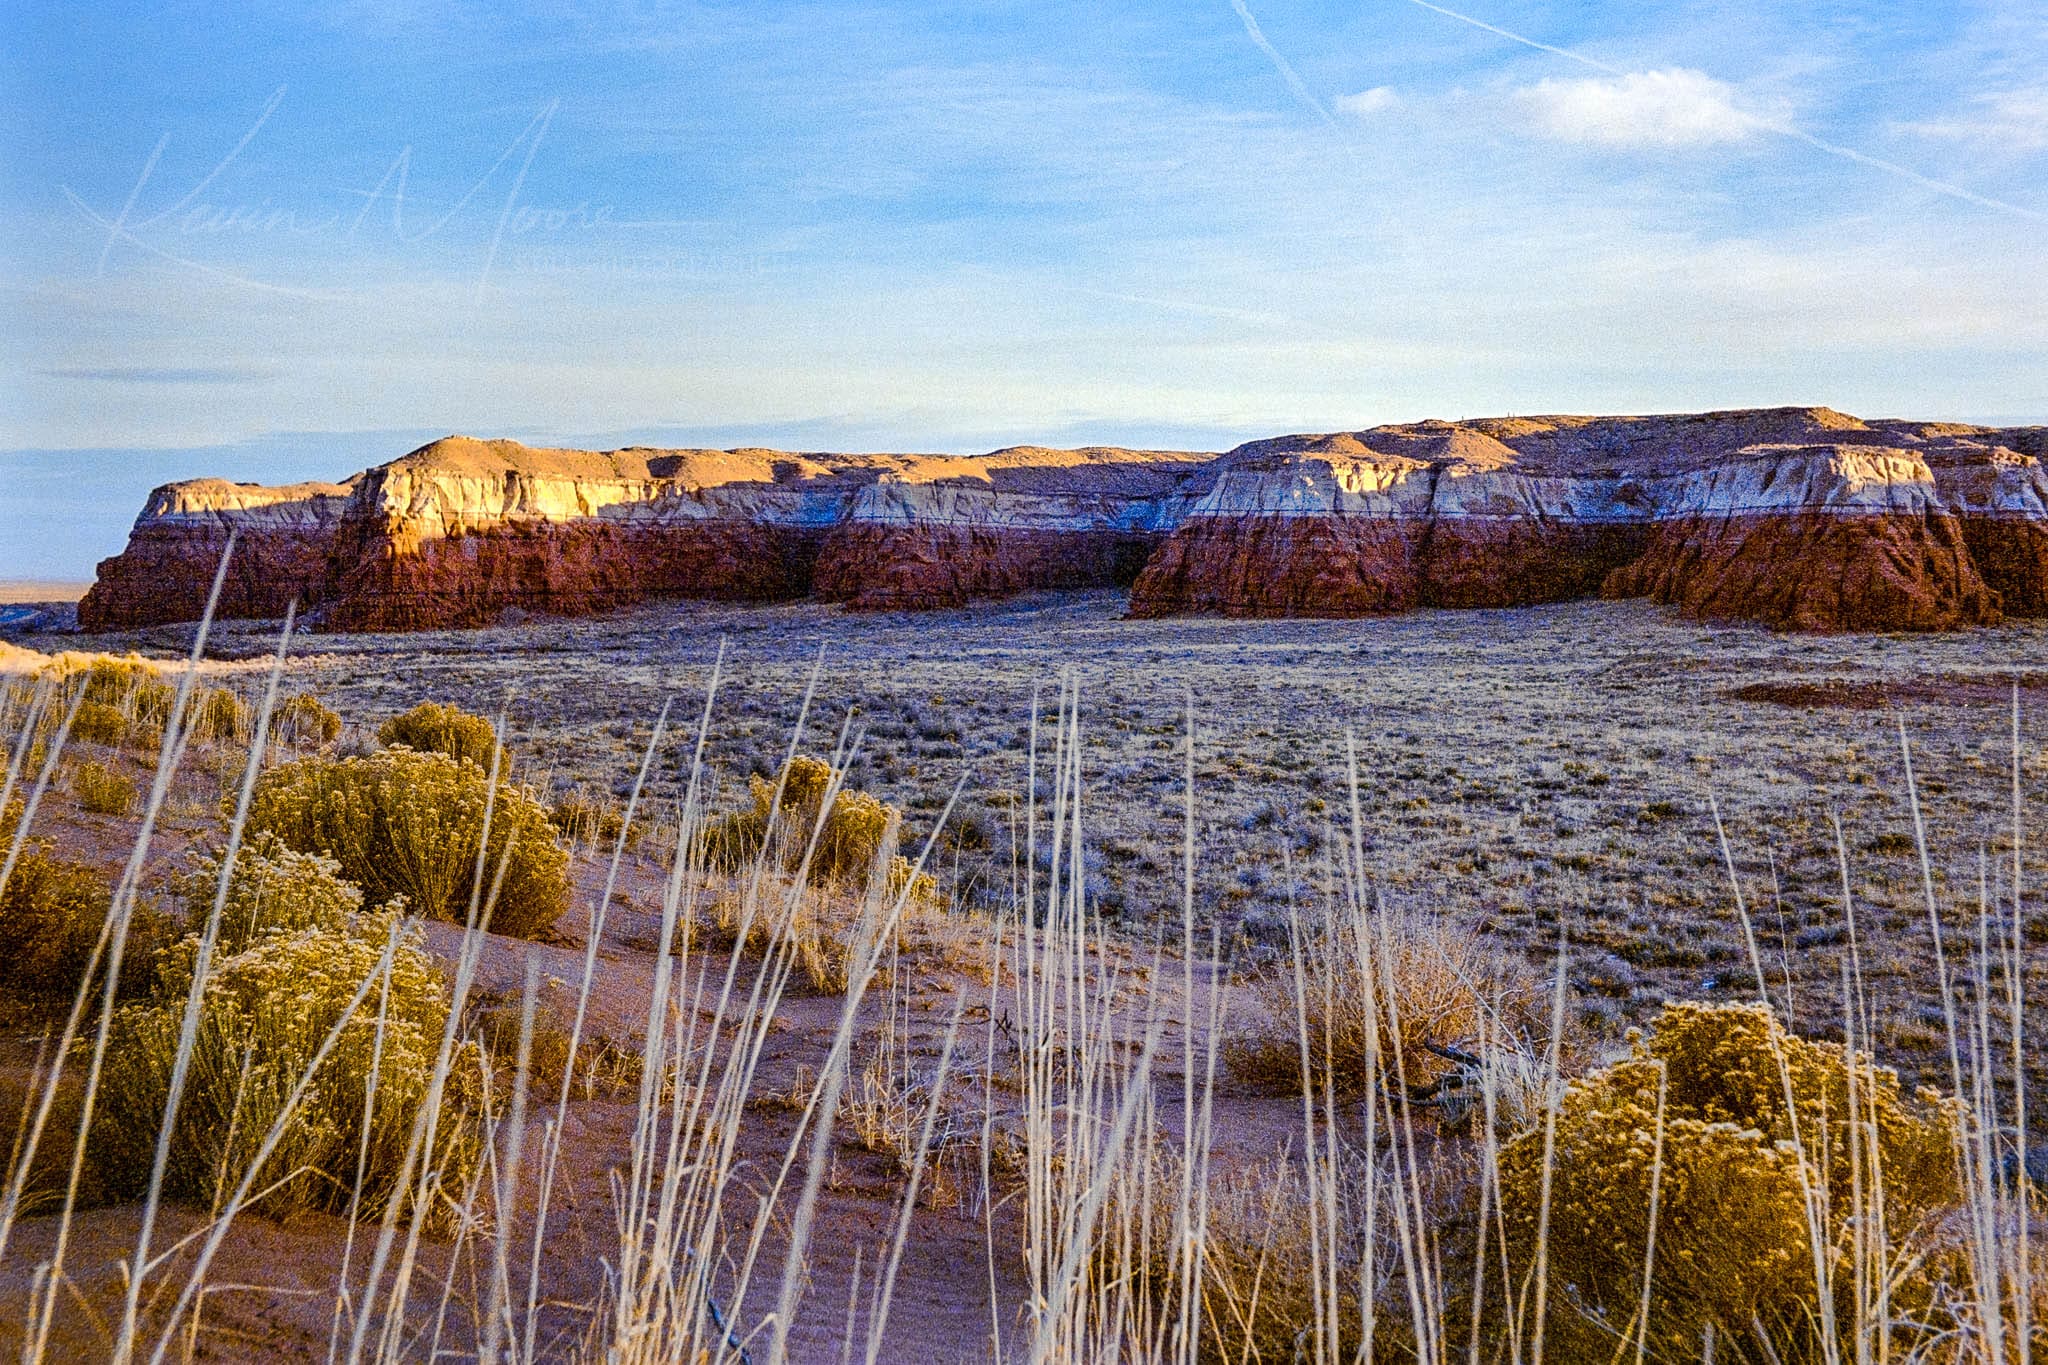 Golden sunrise illuminating a vast mesa amidst a serene, arid landscape with sparse vegetation.